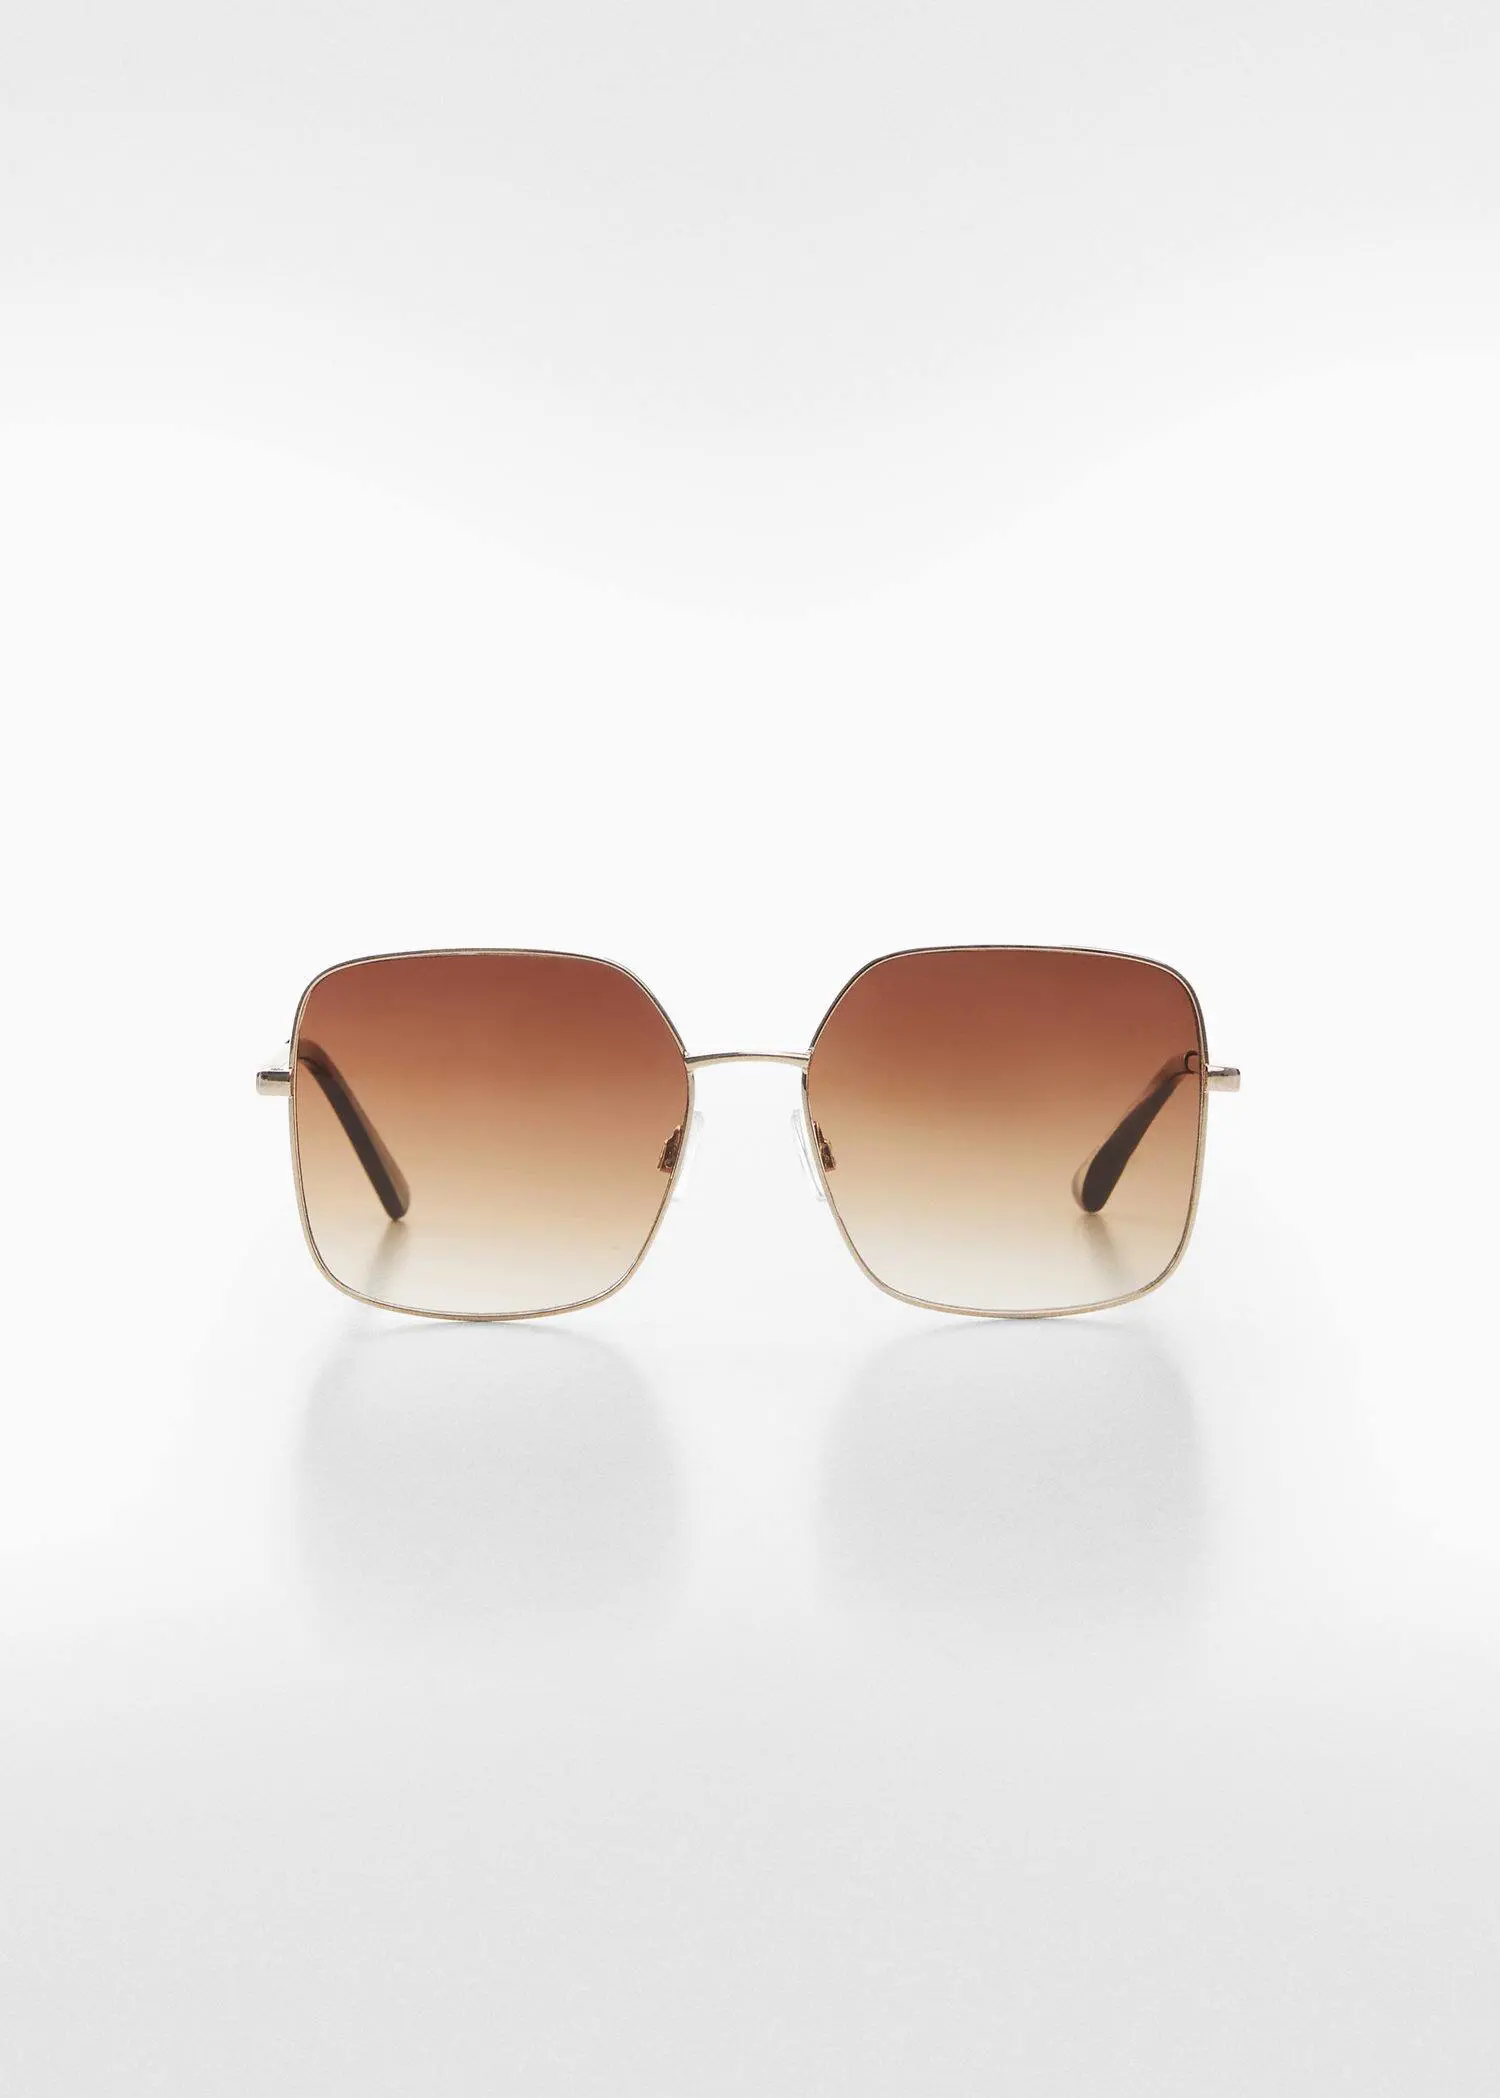 Mango Square metallic frame sunglasses. 2